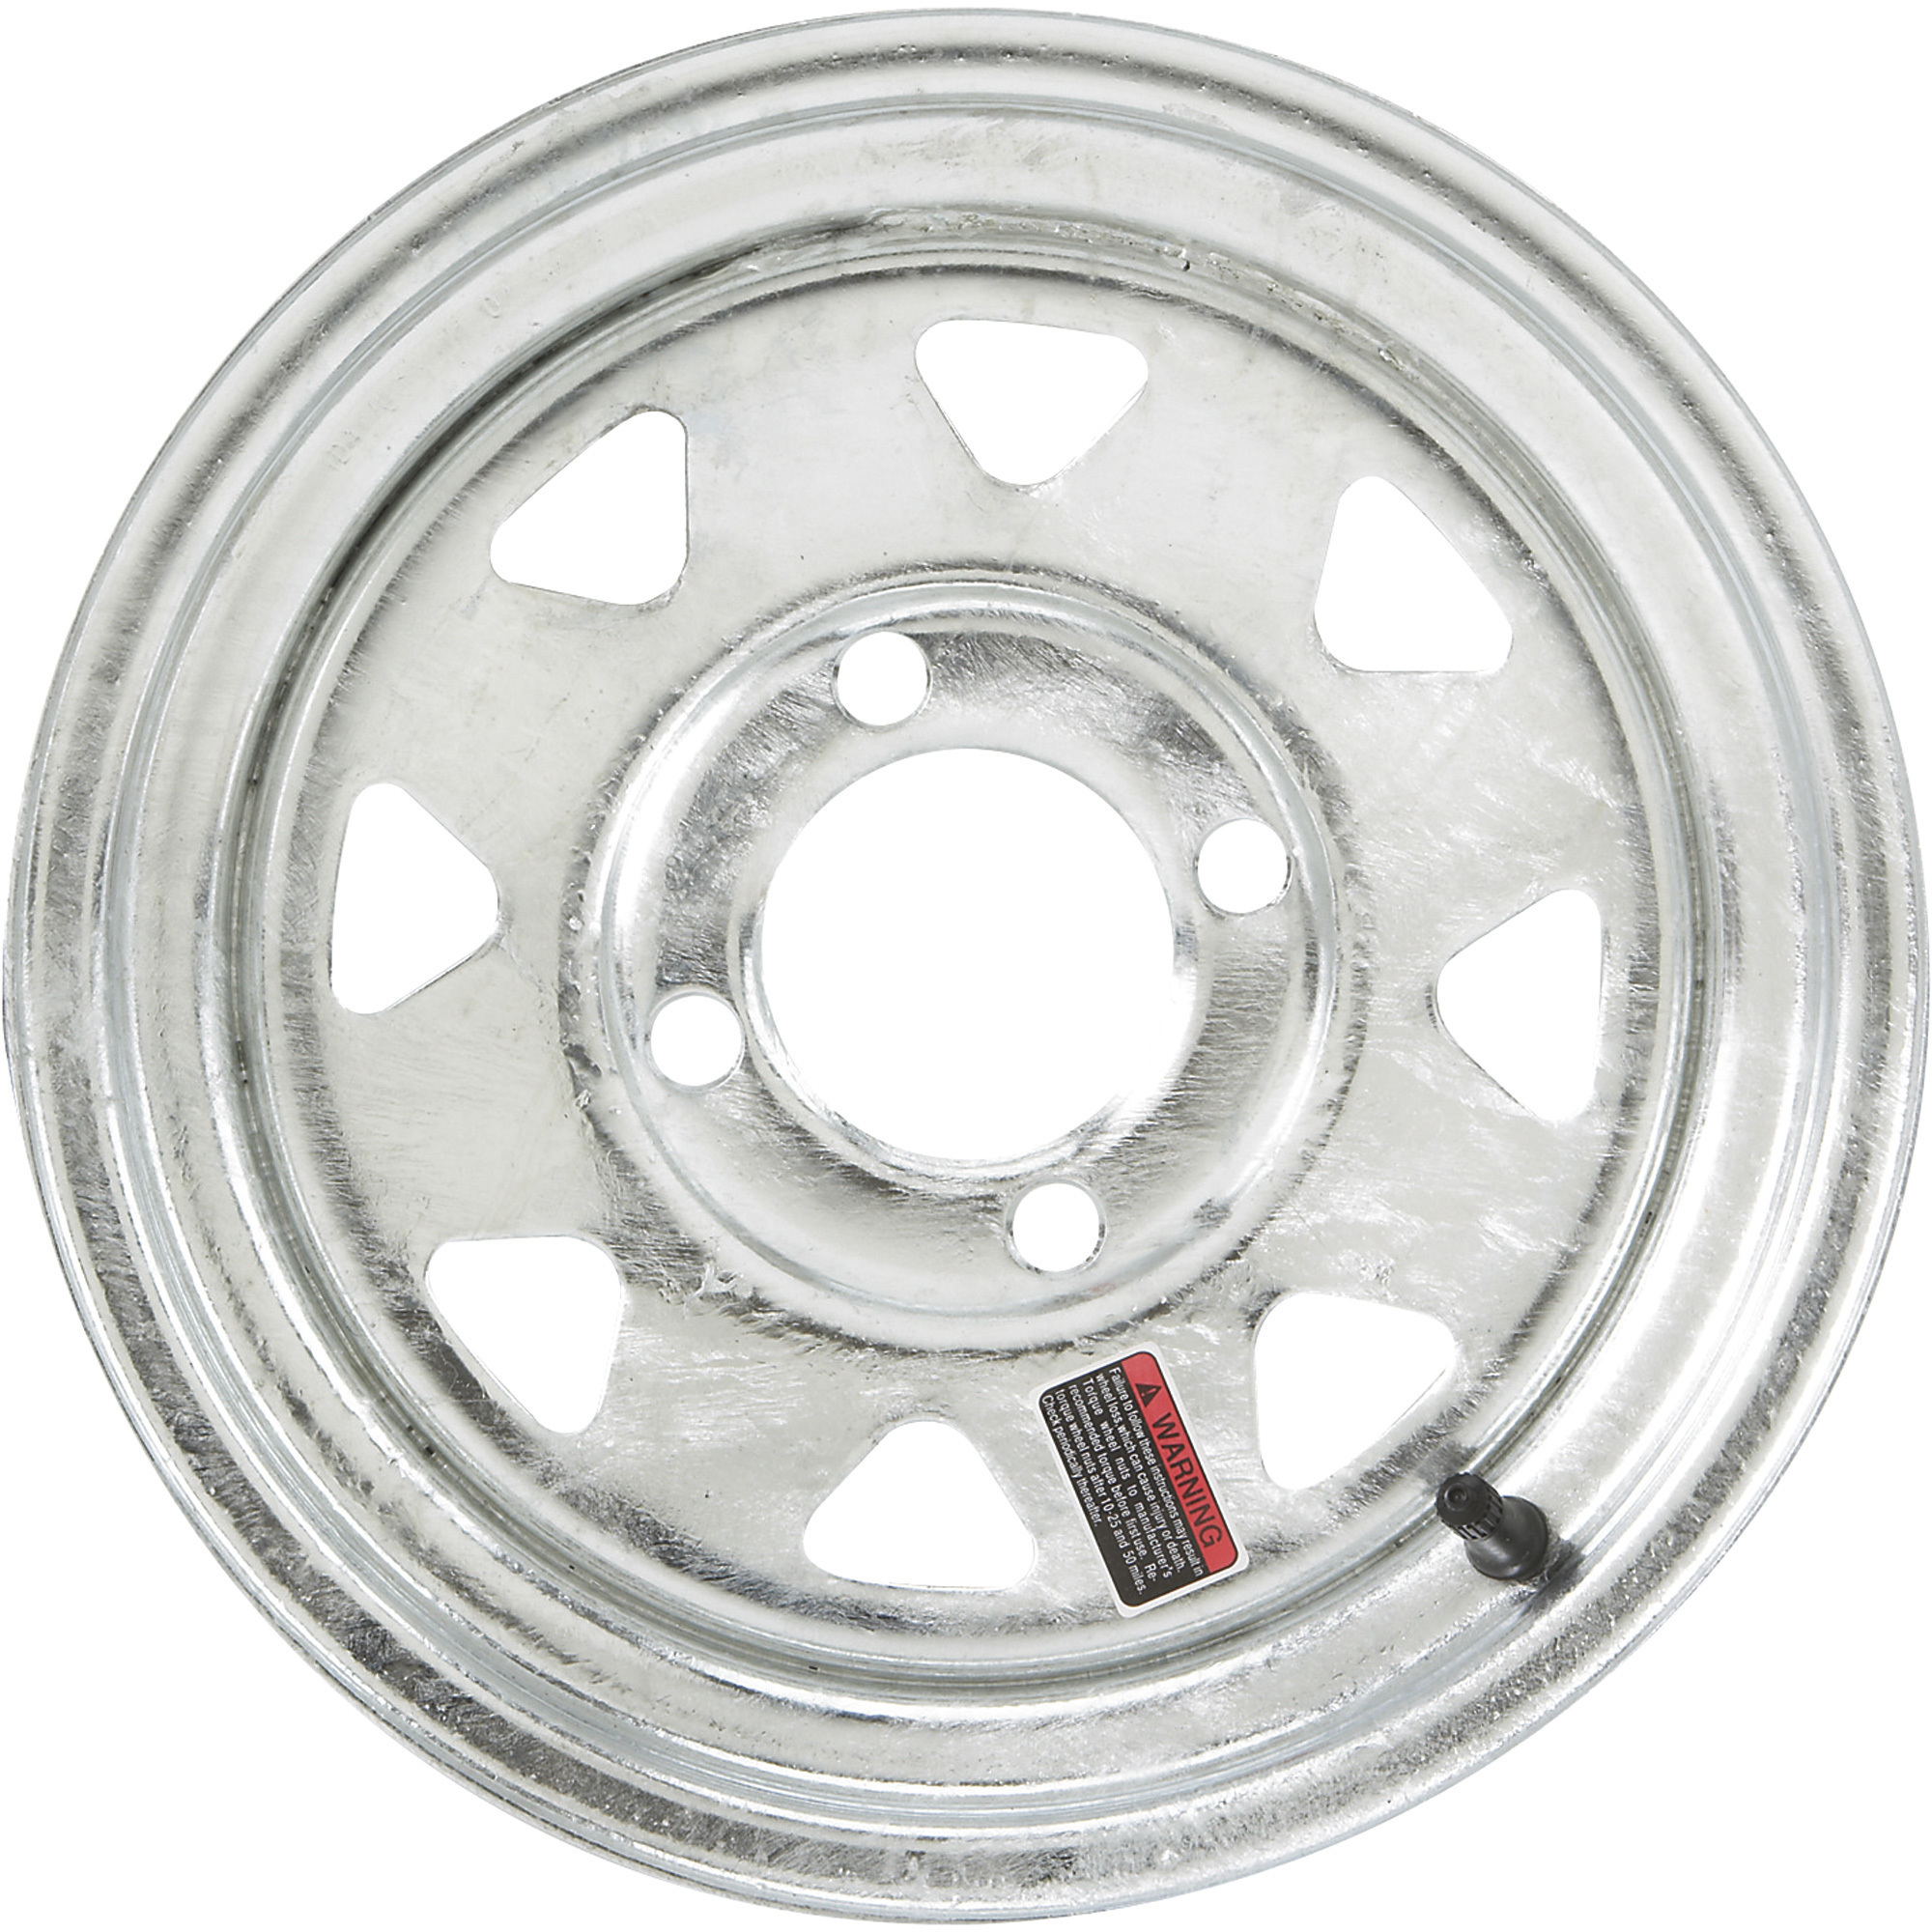 Martin Wheel 12Inch Spoked Trailer Tire Wheel â Rim Only, Fits Tire Sizes 4.80 x 12, 5.30 x 12, 4-Hole, Model R-124S-G-VN